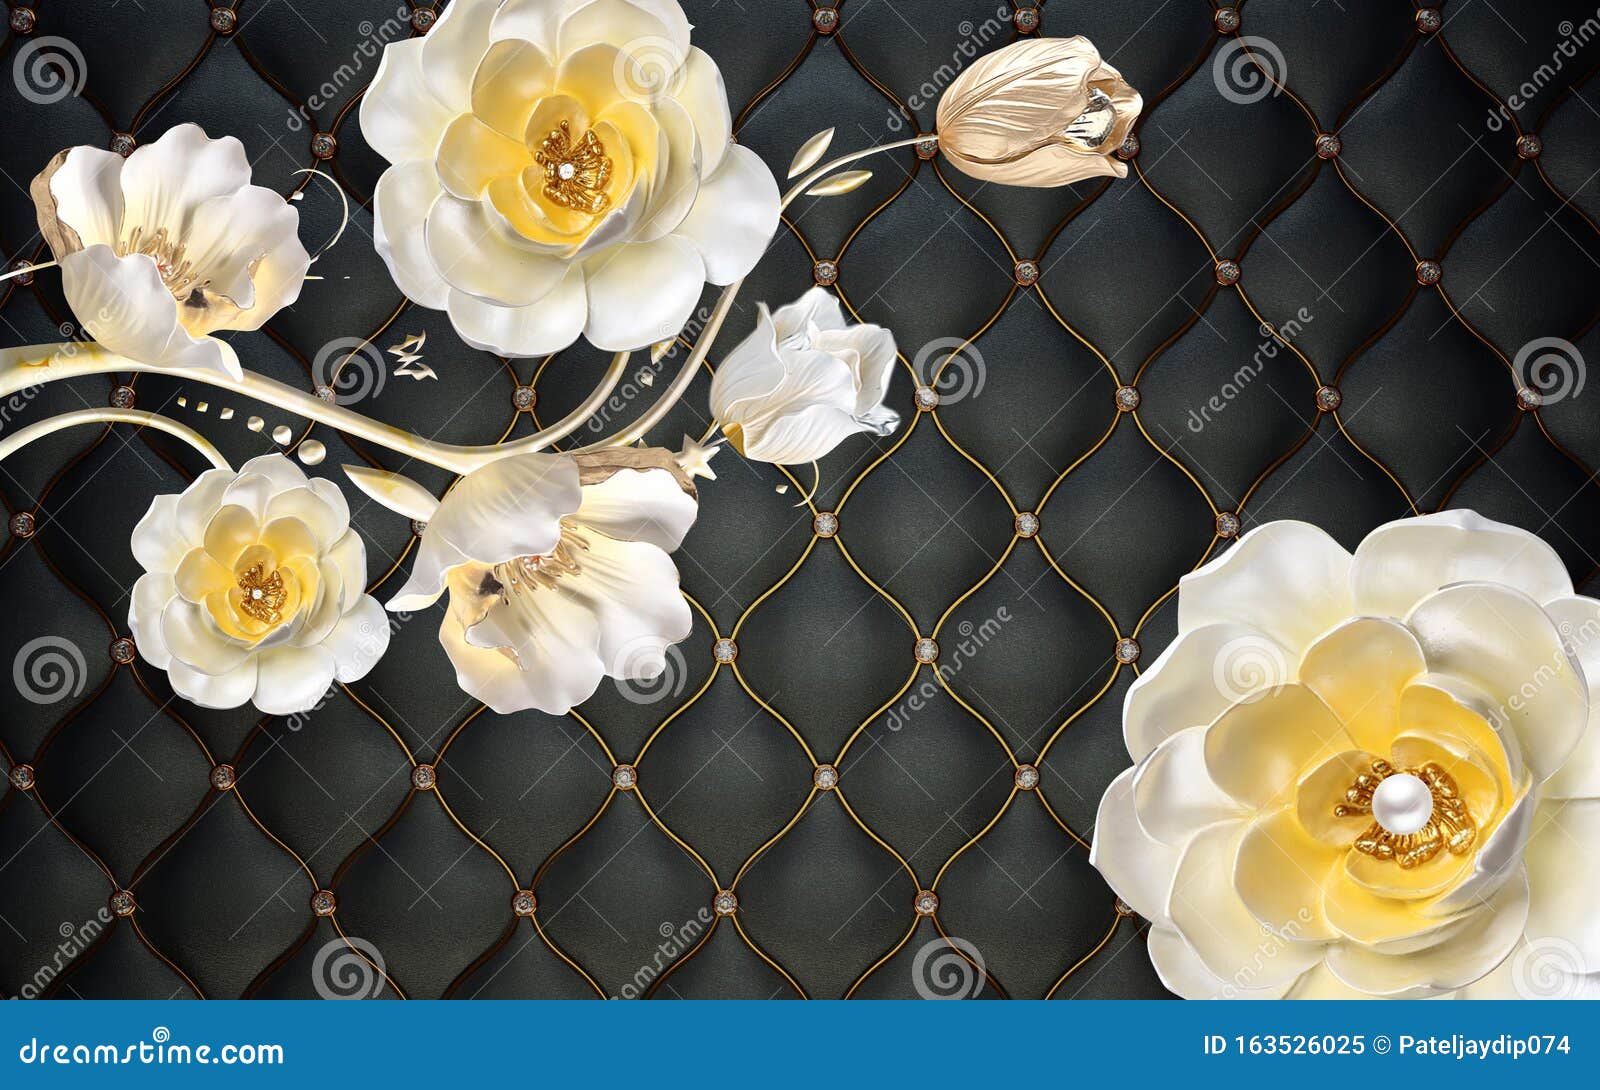 3d Flower Design Wallpaper Background, Stock Illustration - Illustration of  fresh, abstract: 163526025